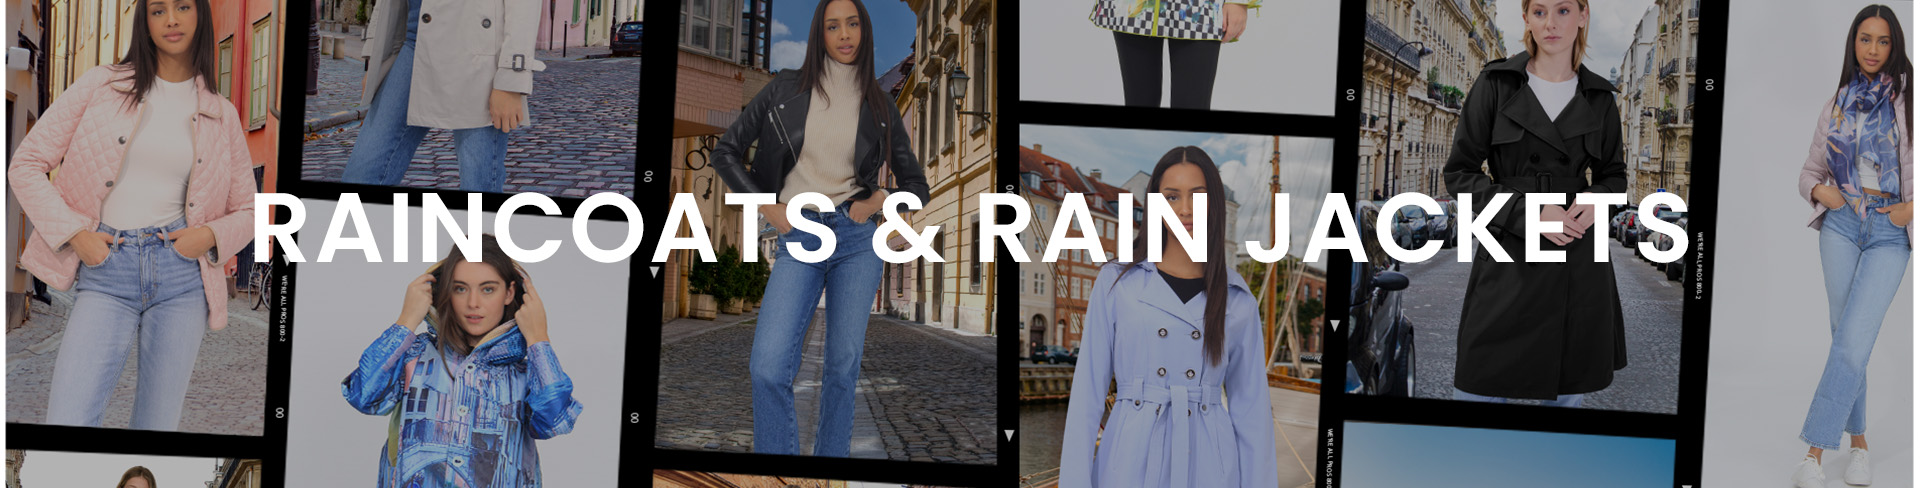 Raincoats & Rain Jackets